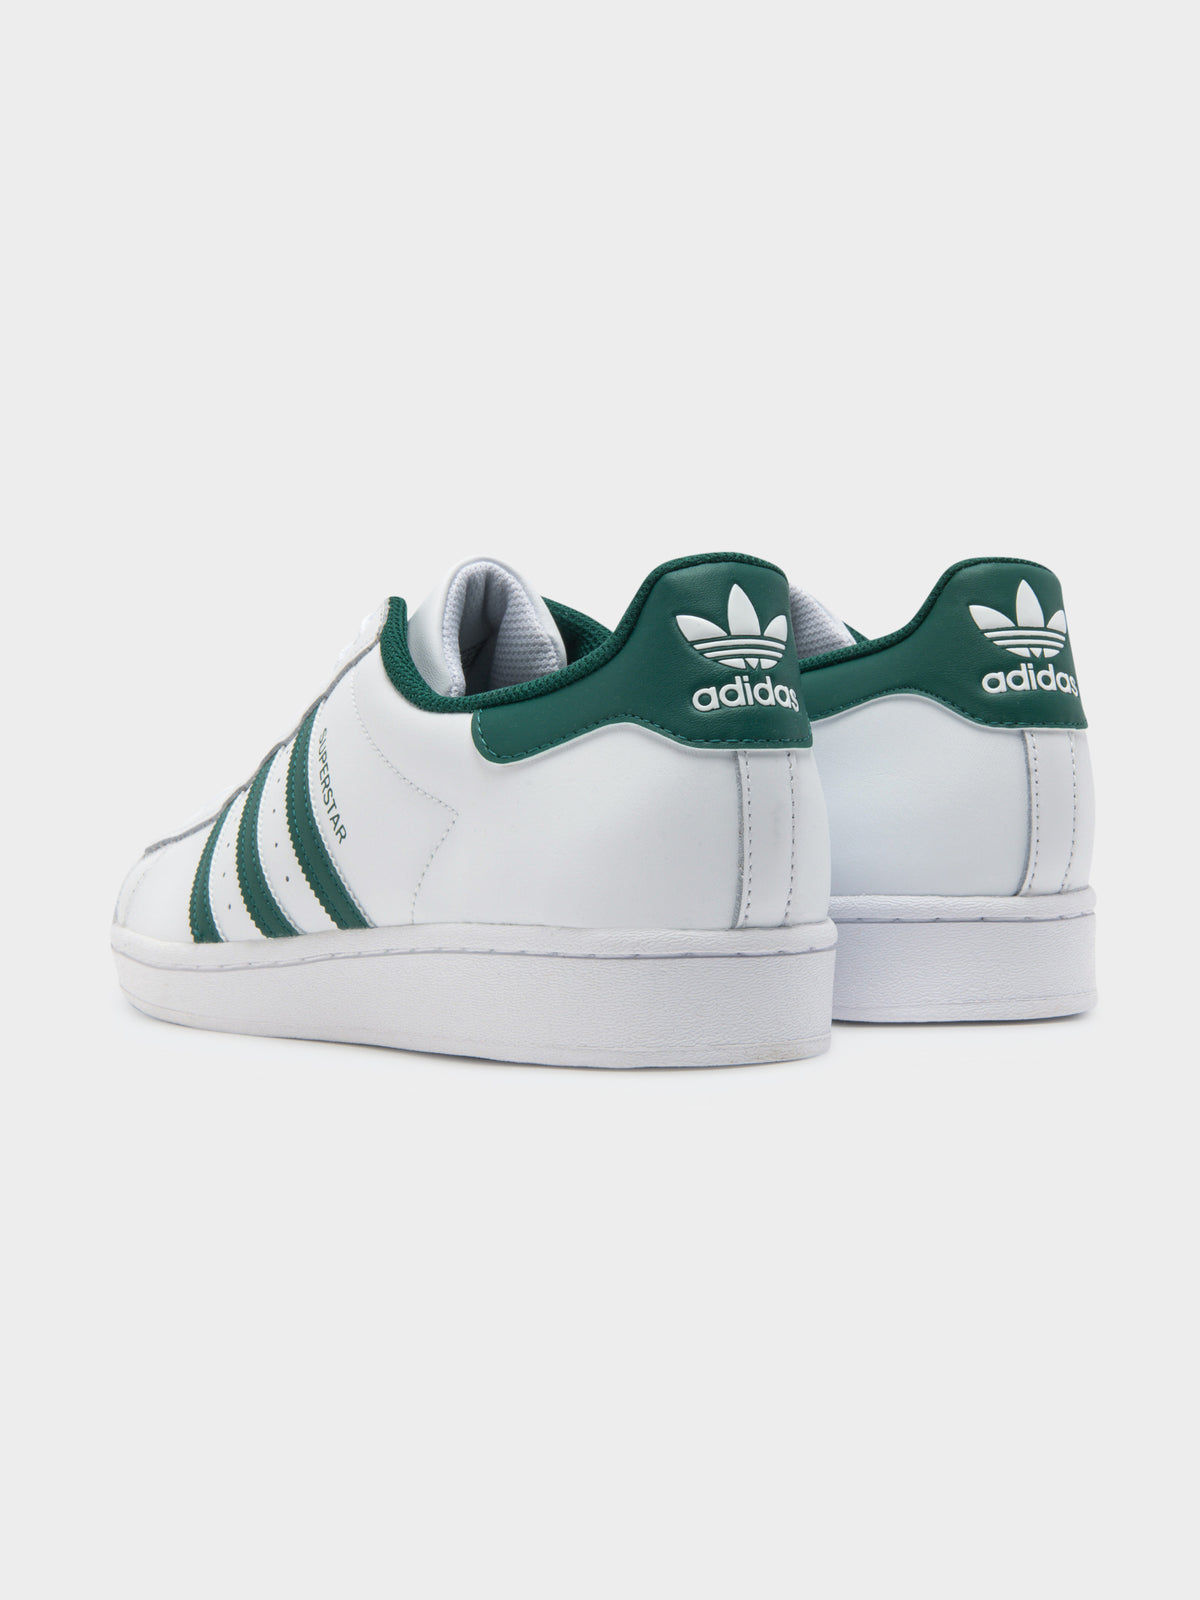 Unisex Superstar Shoe in Green &amp; White